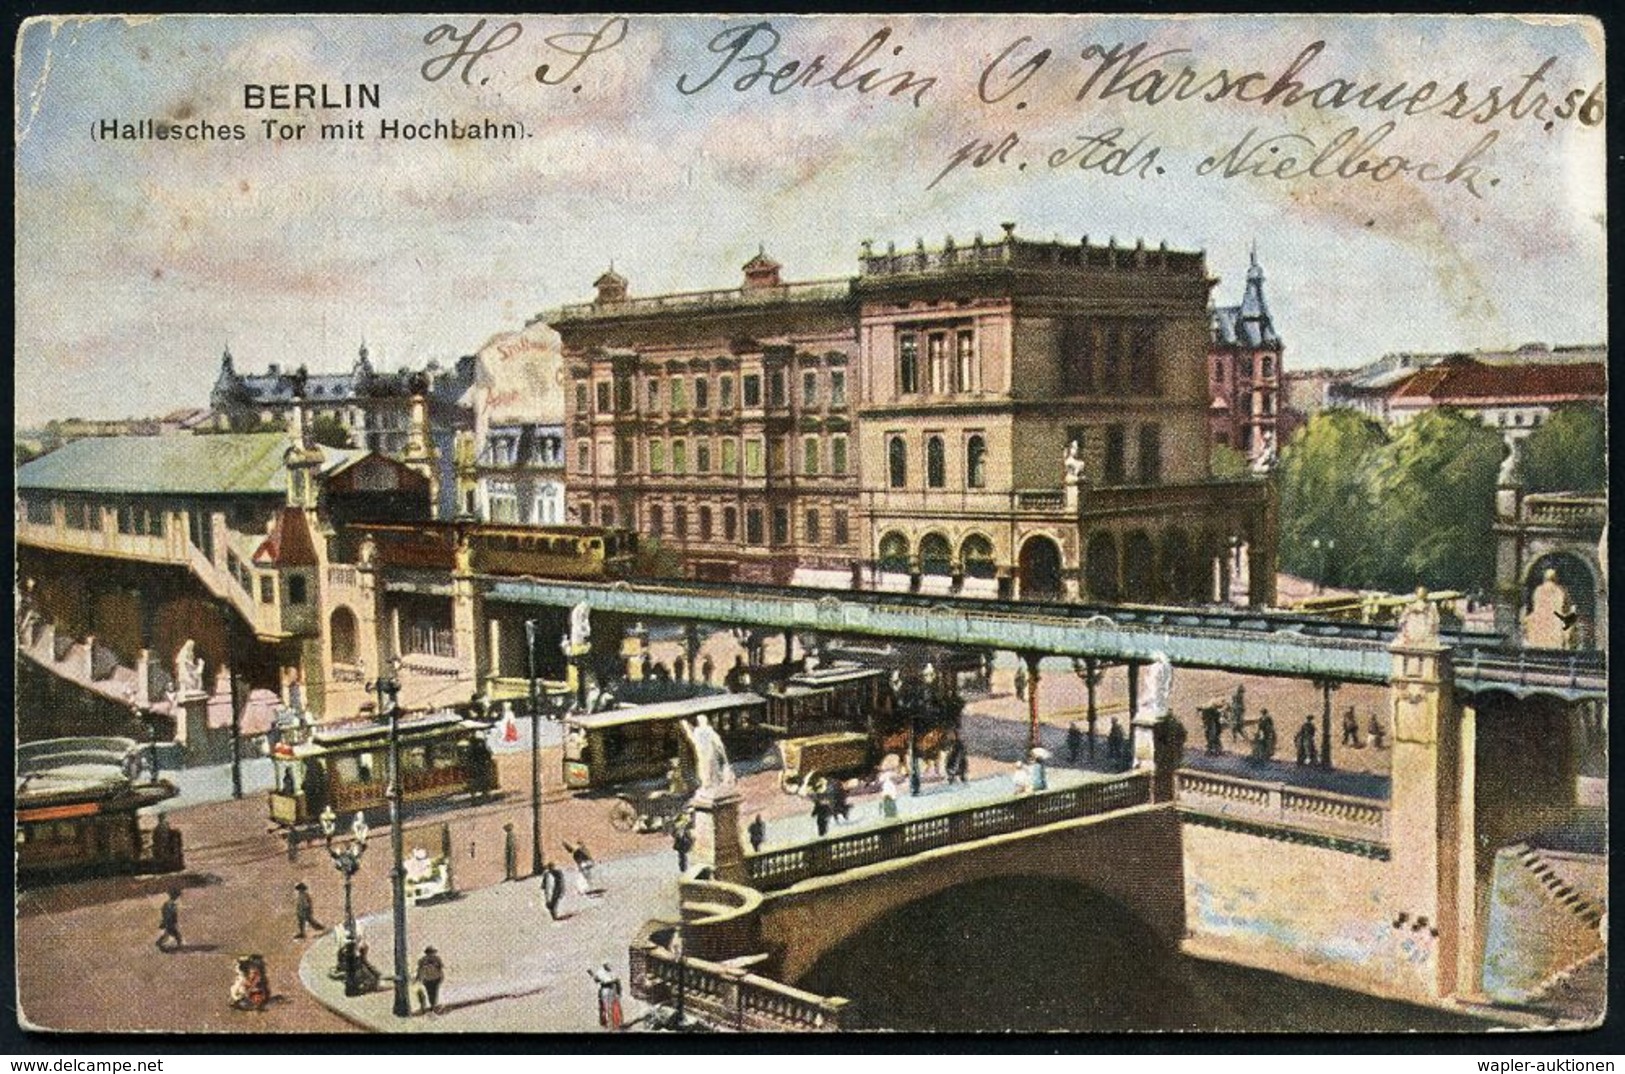 UNTERGRUNDBAHN /U-BAHN : Berlin-Kreuzberg 1905/15 U-Bahnhof Hallesches Tor, 10 verschiedene Color-Foto-Ak. , meist gebr.